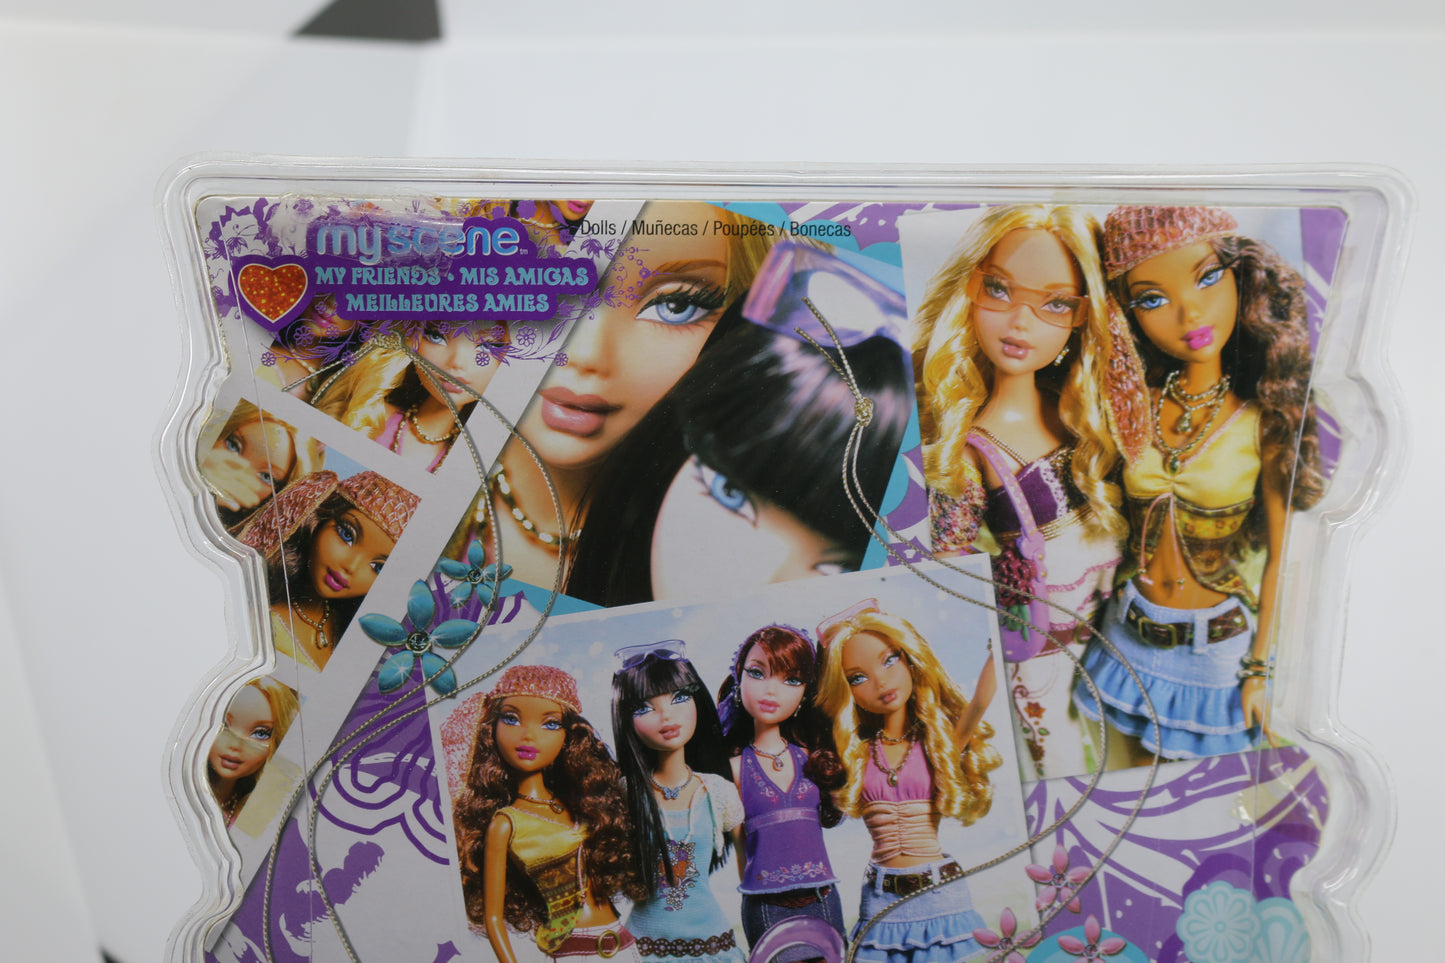 Mattel Barbie My Scene I Love My Friends Madison & Kennedy Boho Chic! New in Box